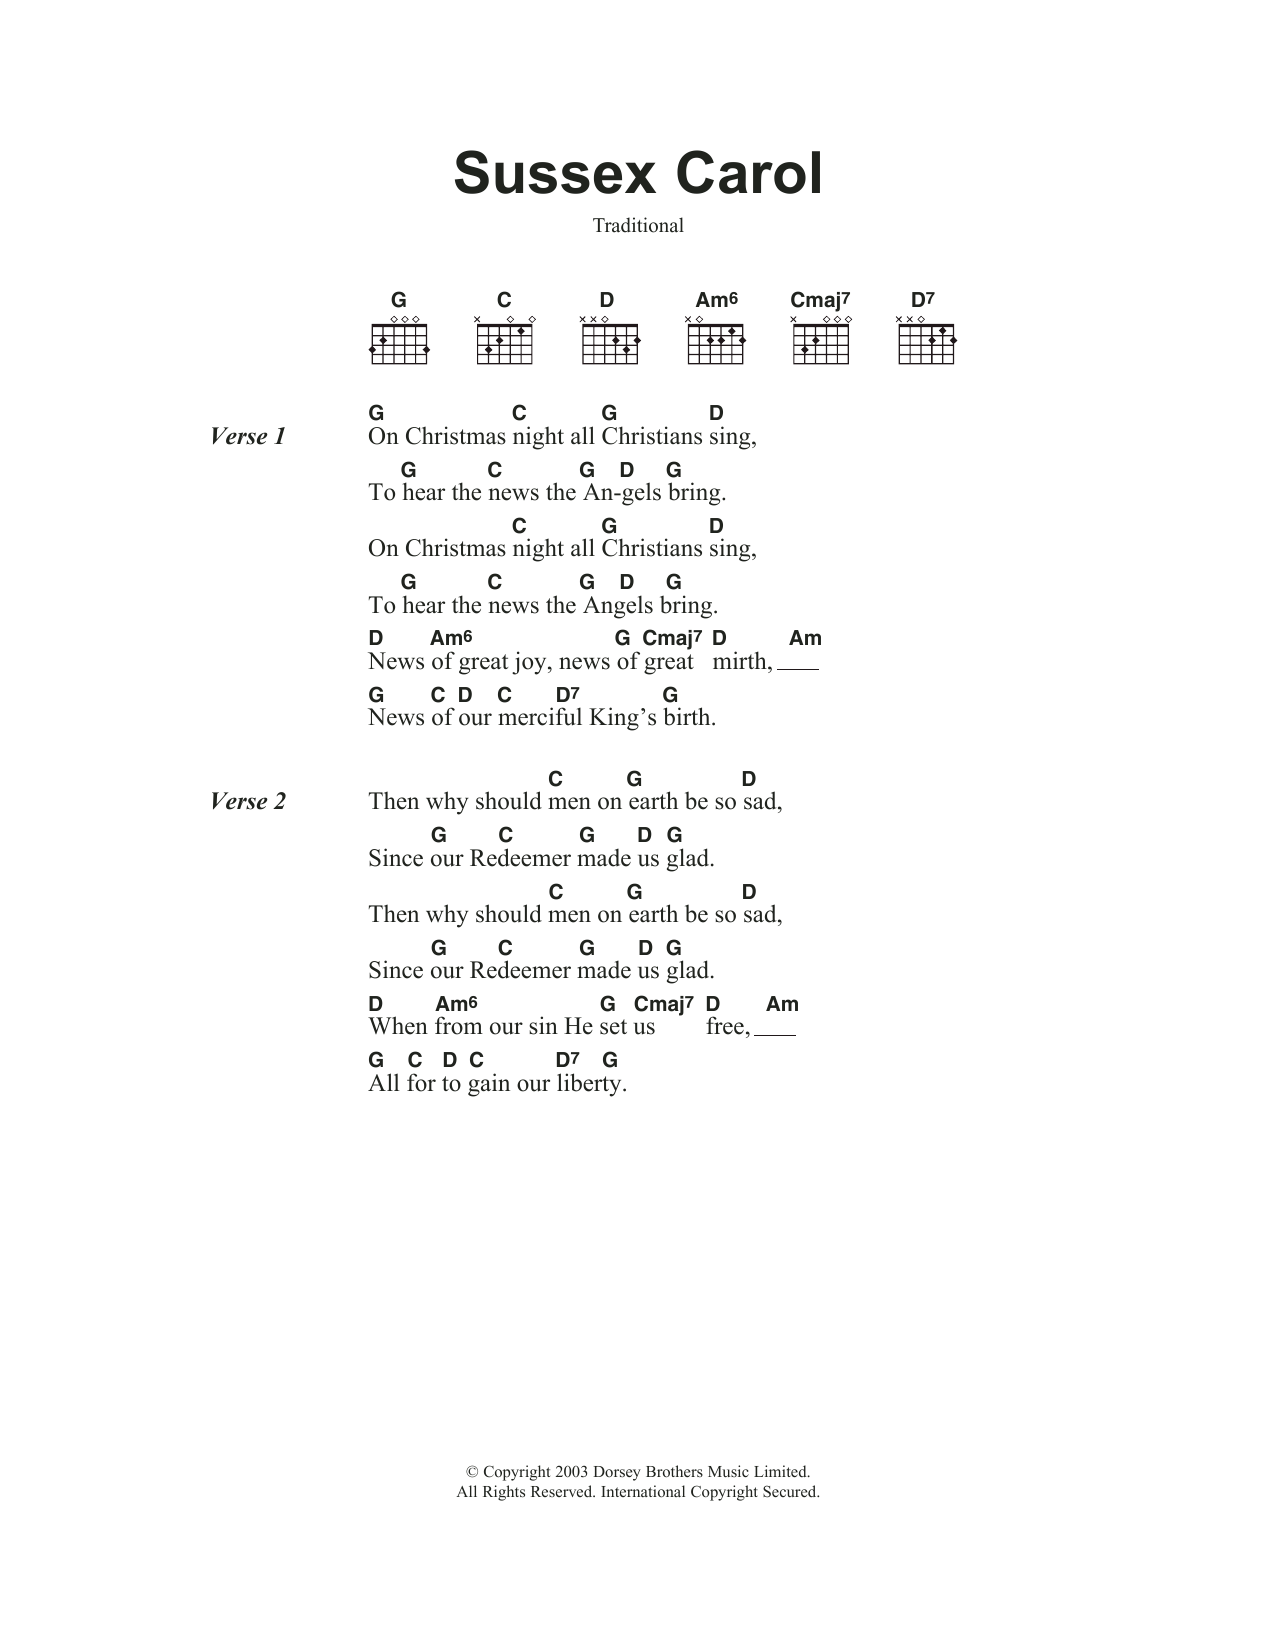 Traditional Carol Sussex Carol Sheet Music Notes & Chords for Guitar Chords/Lyrics - Download or Print PDF